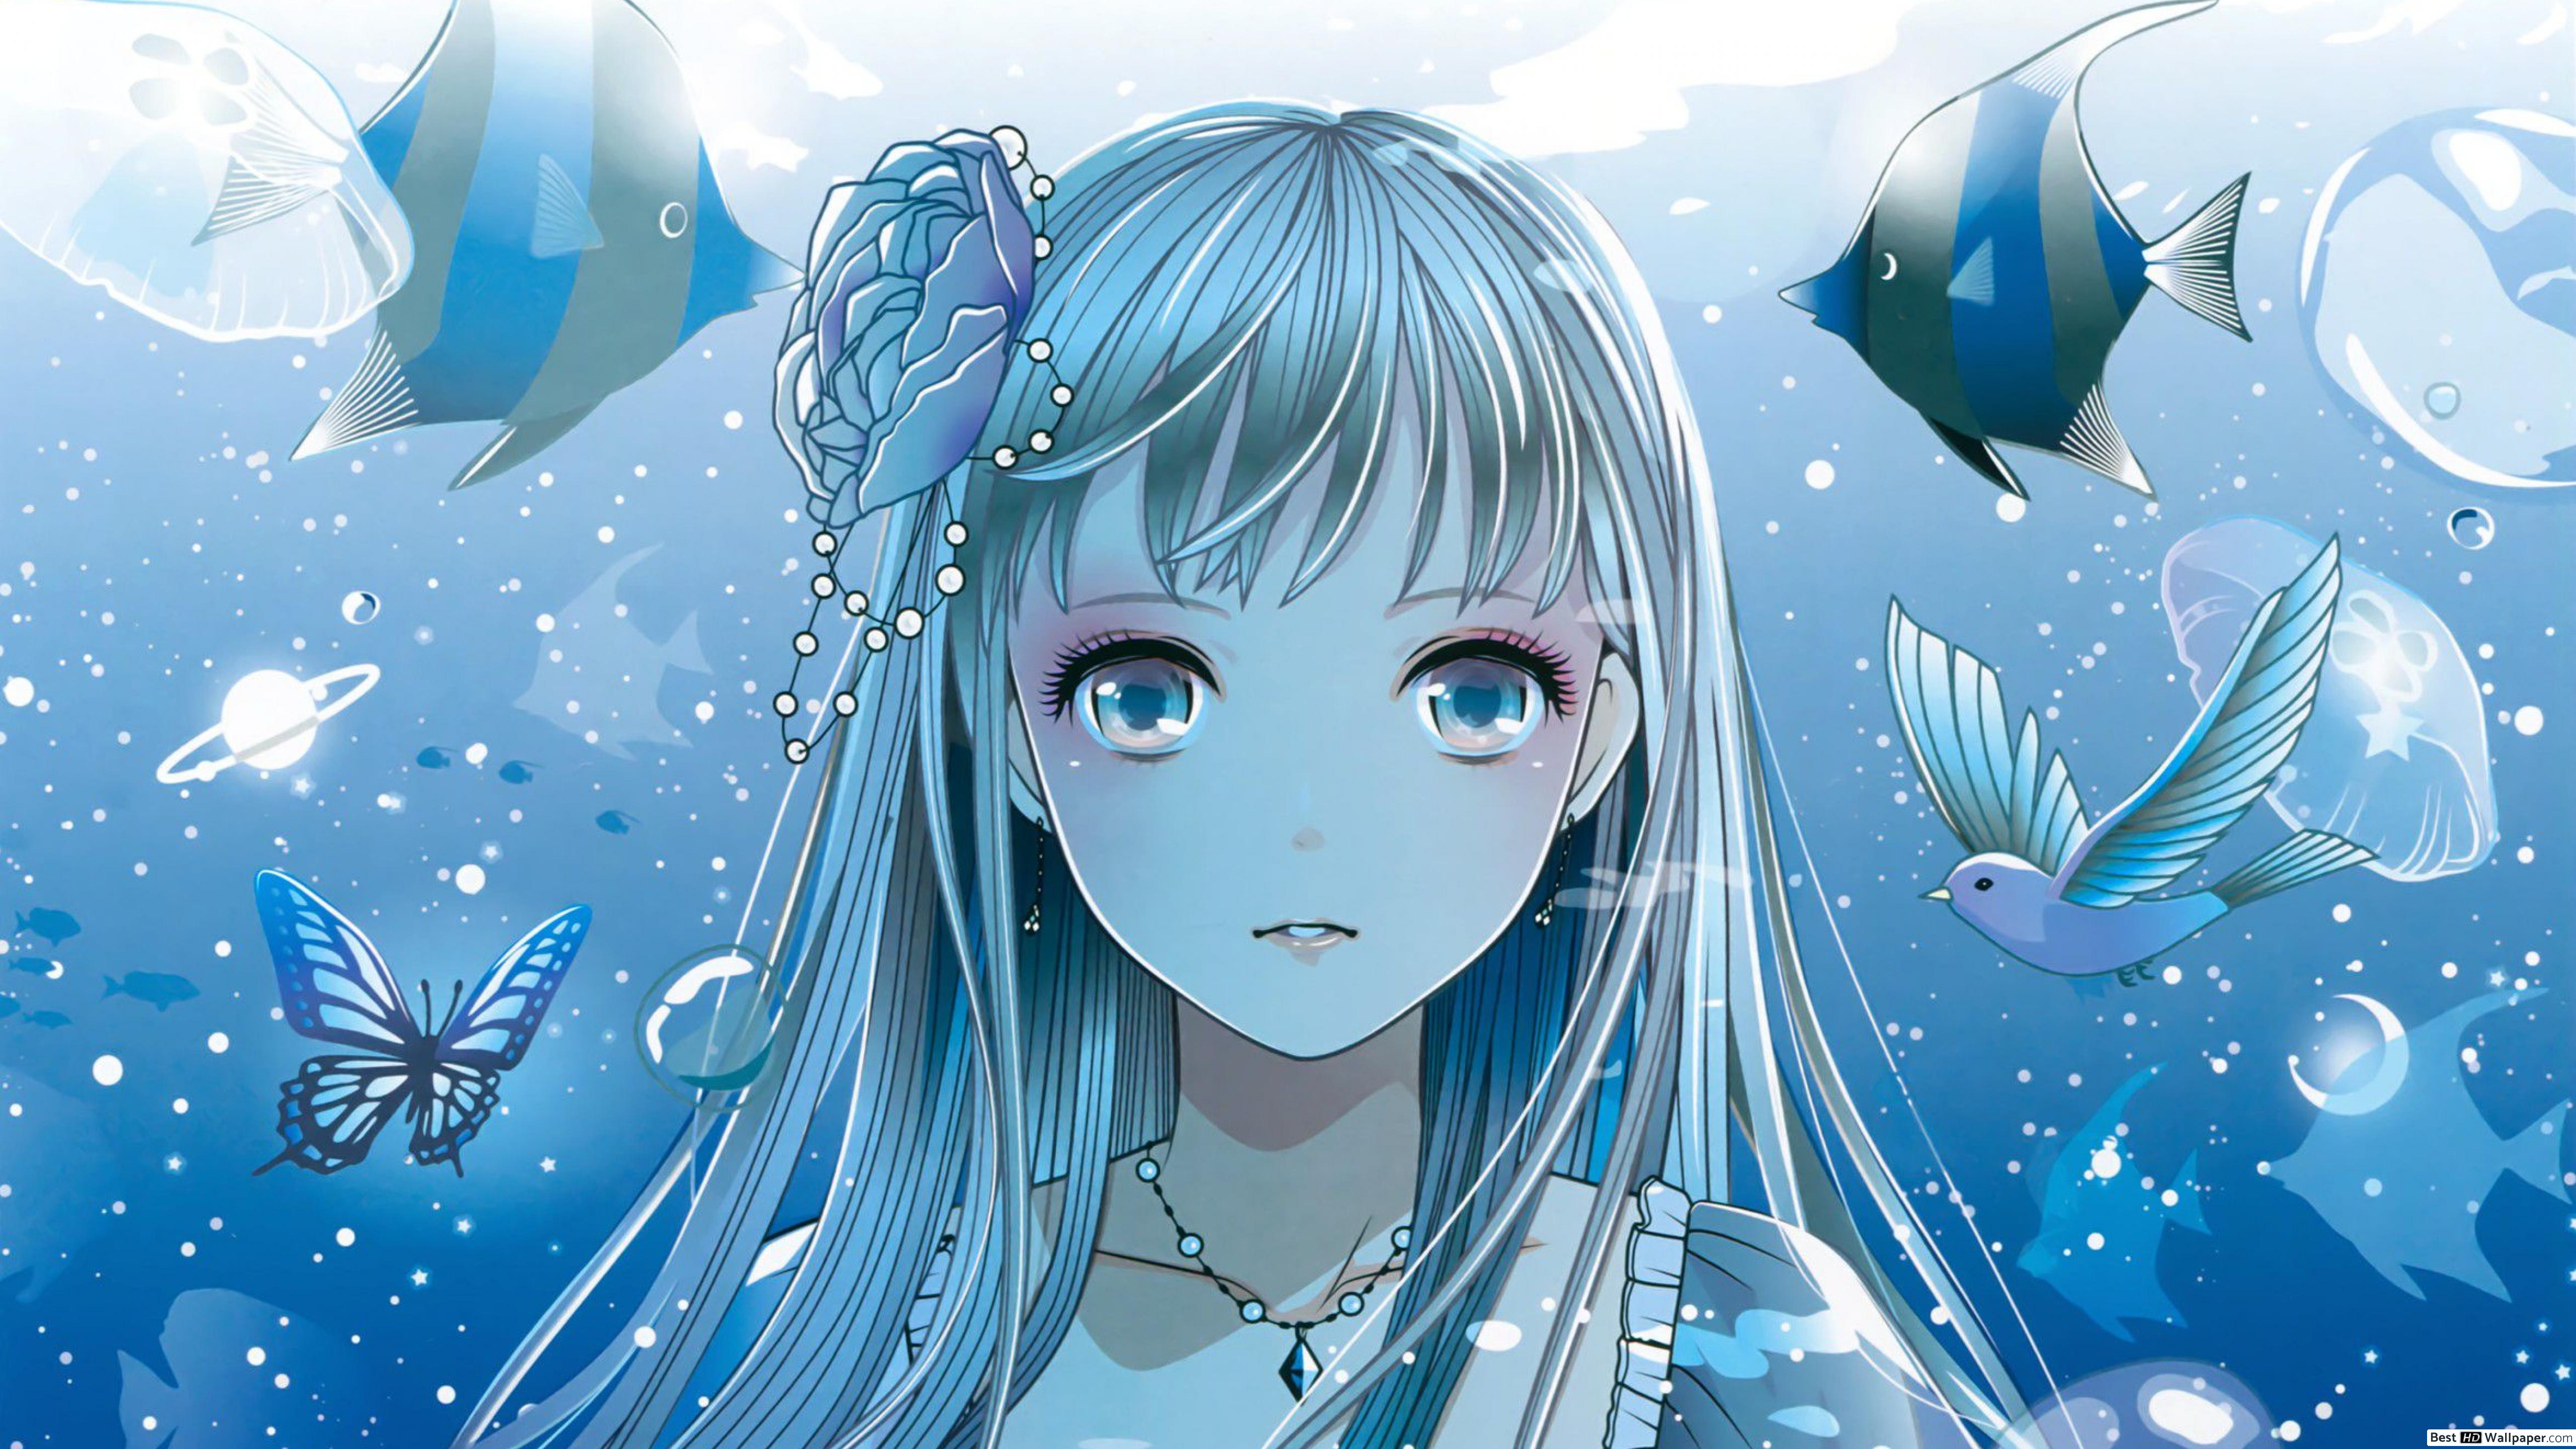 2. "Sad Anime Girl with Blue Hair" - wide 8